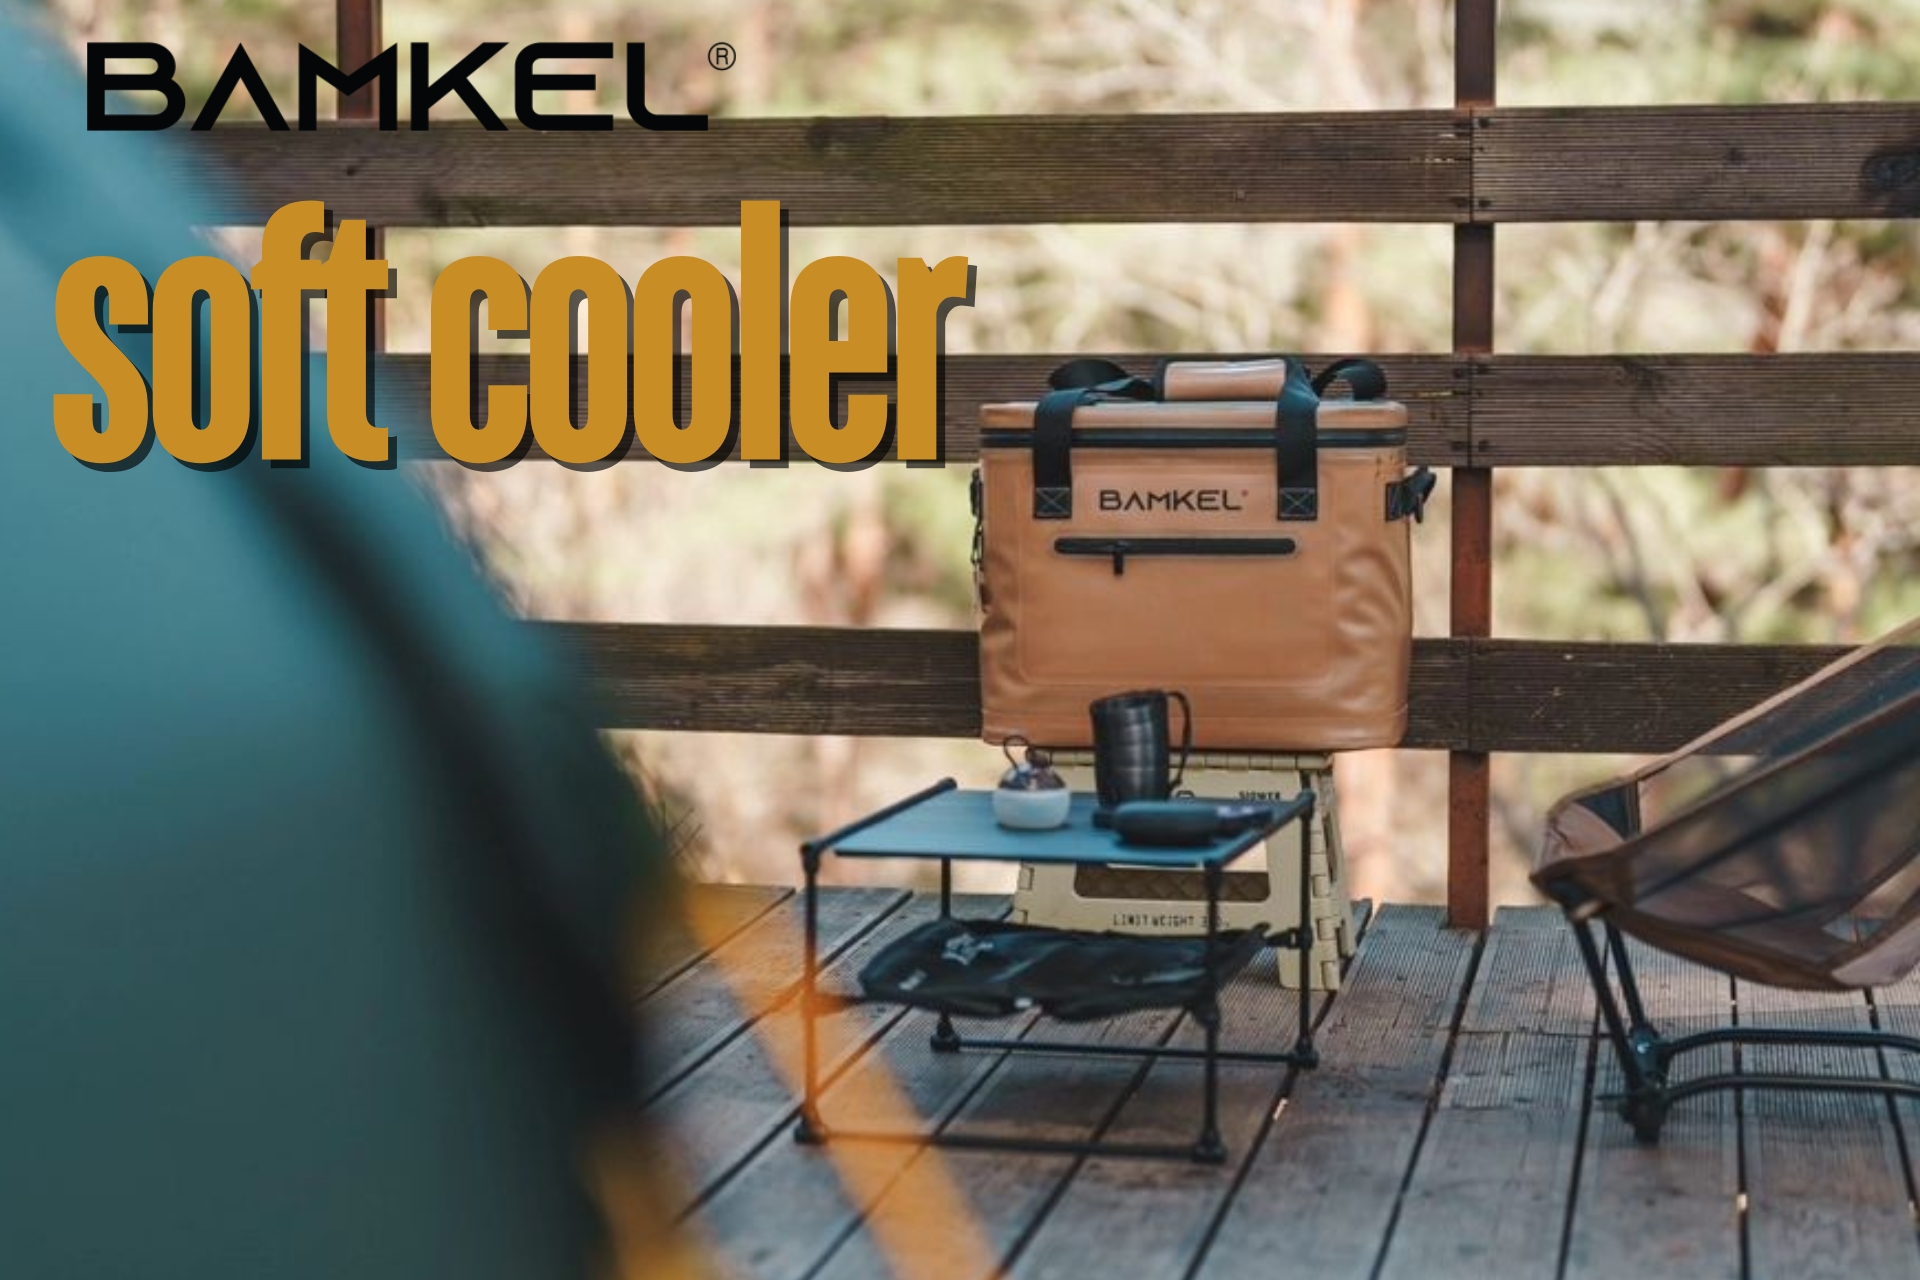 Soft Cooler Bamkel Outdoor